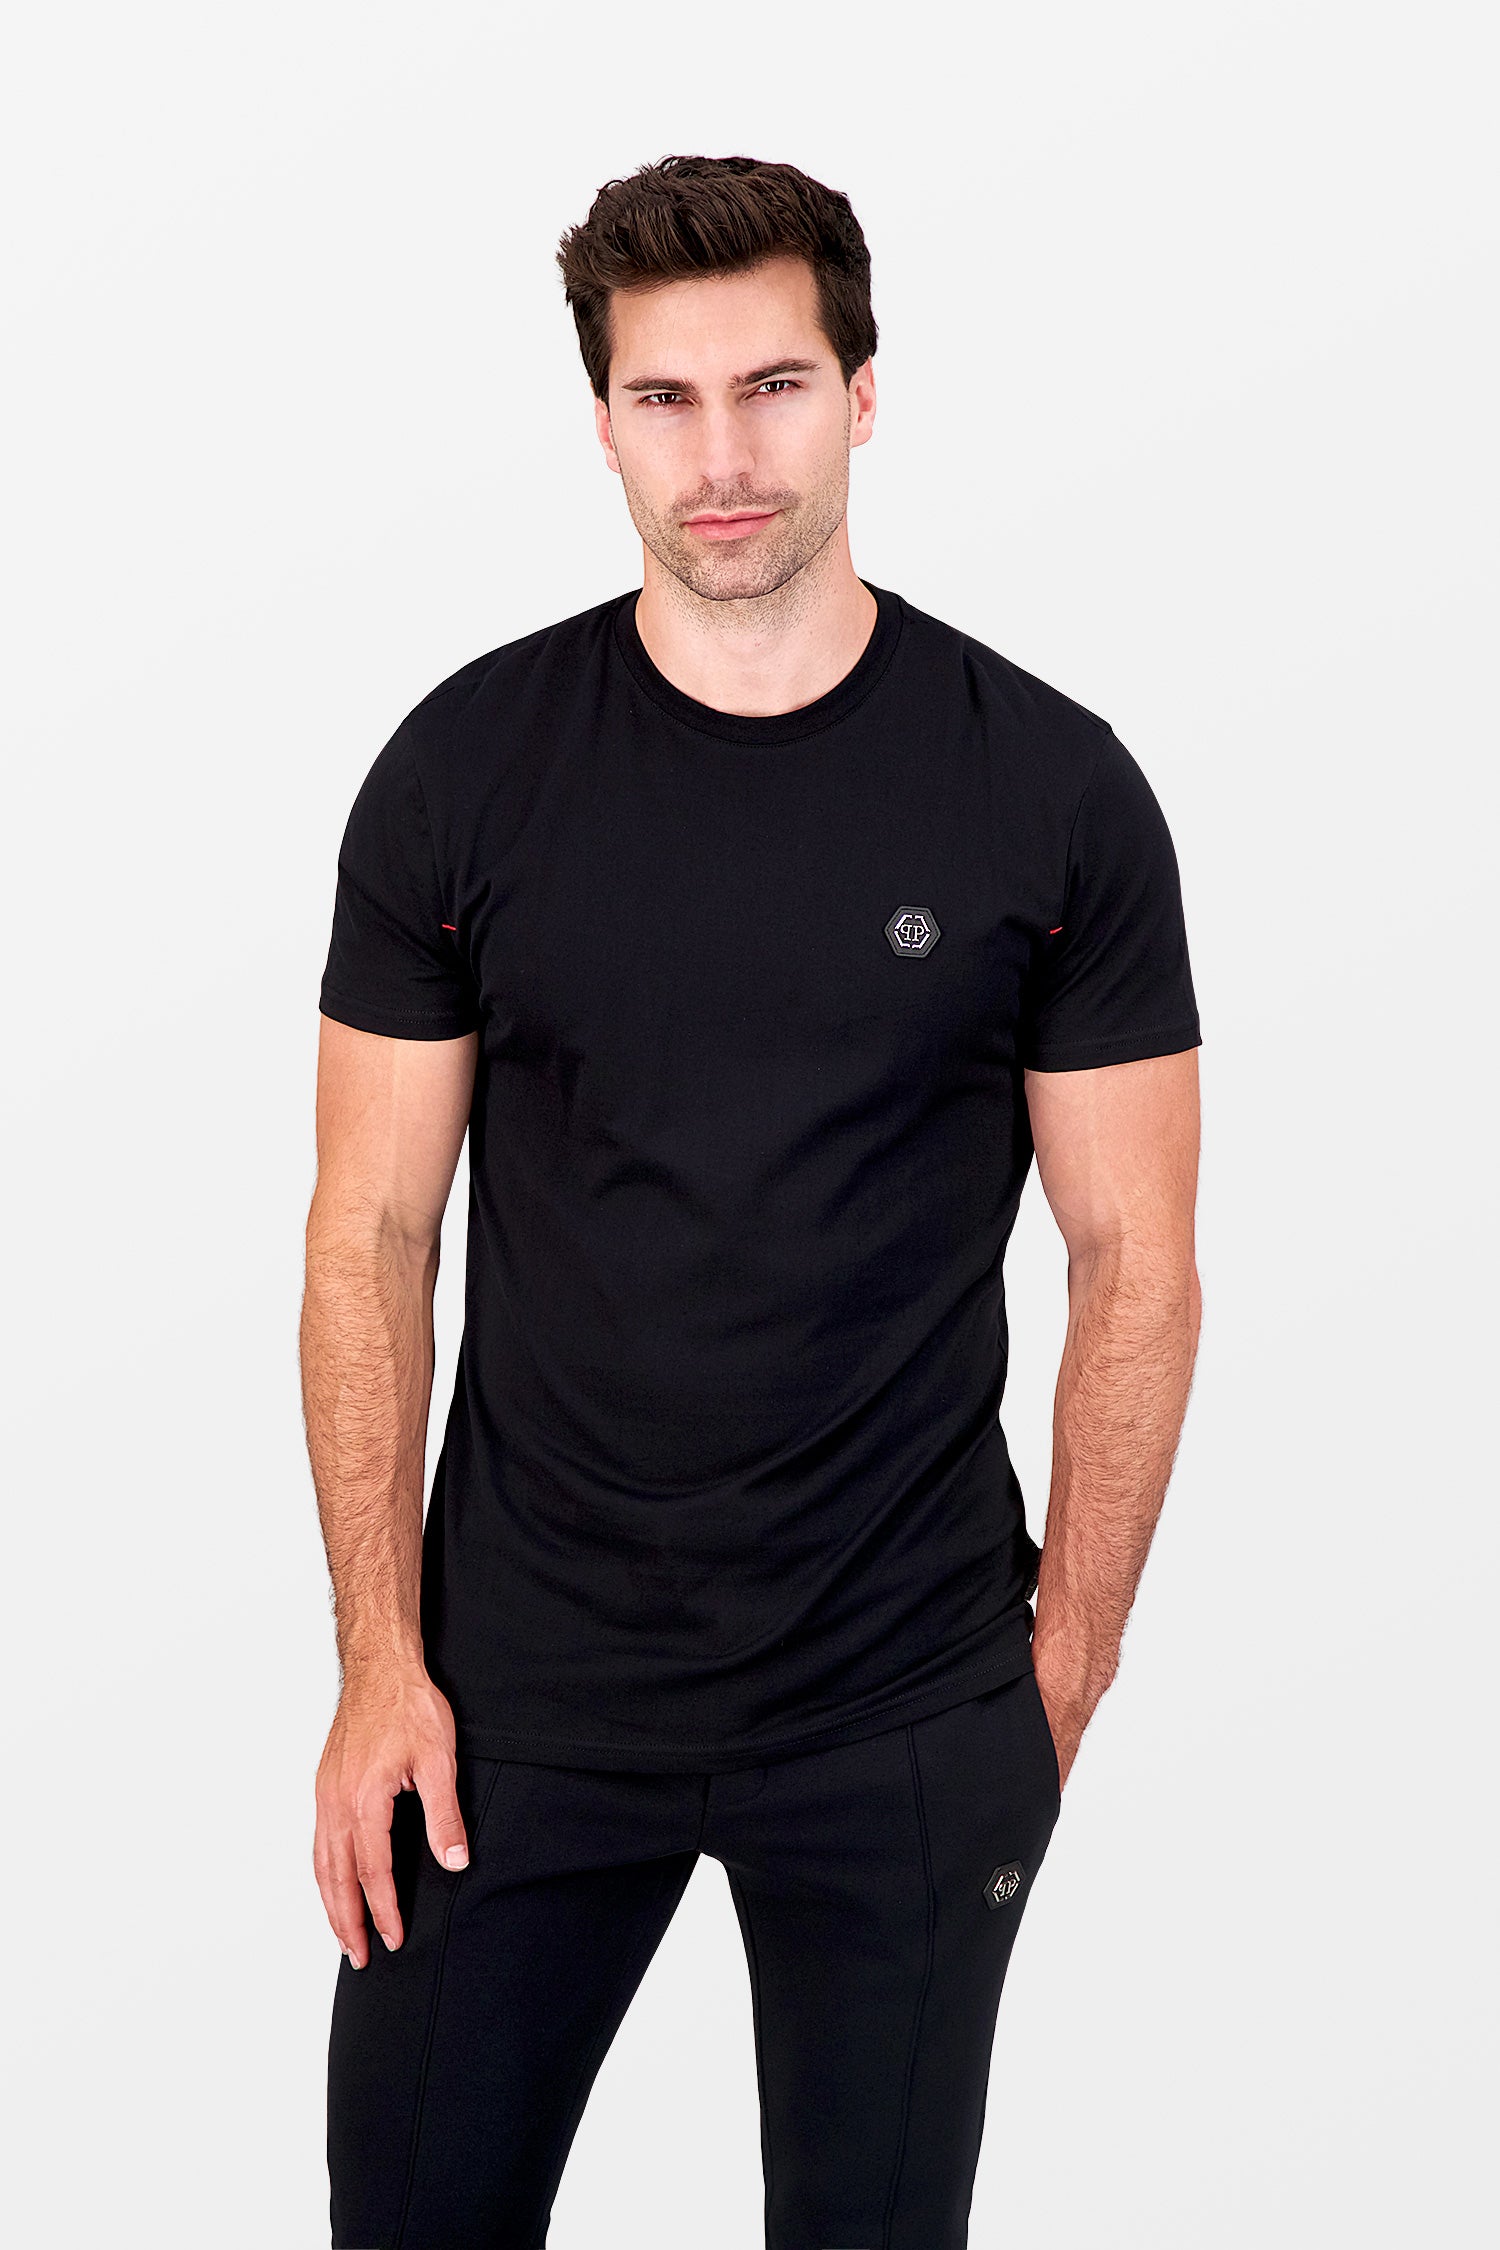 Philipp Plein Black Institutional T-Shirt